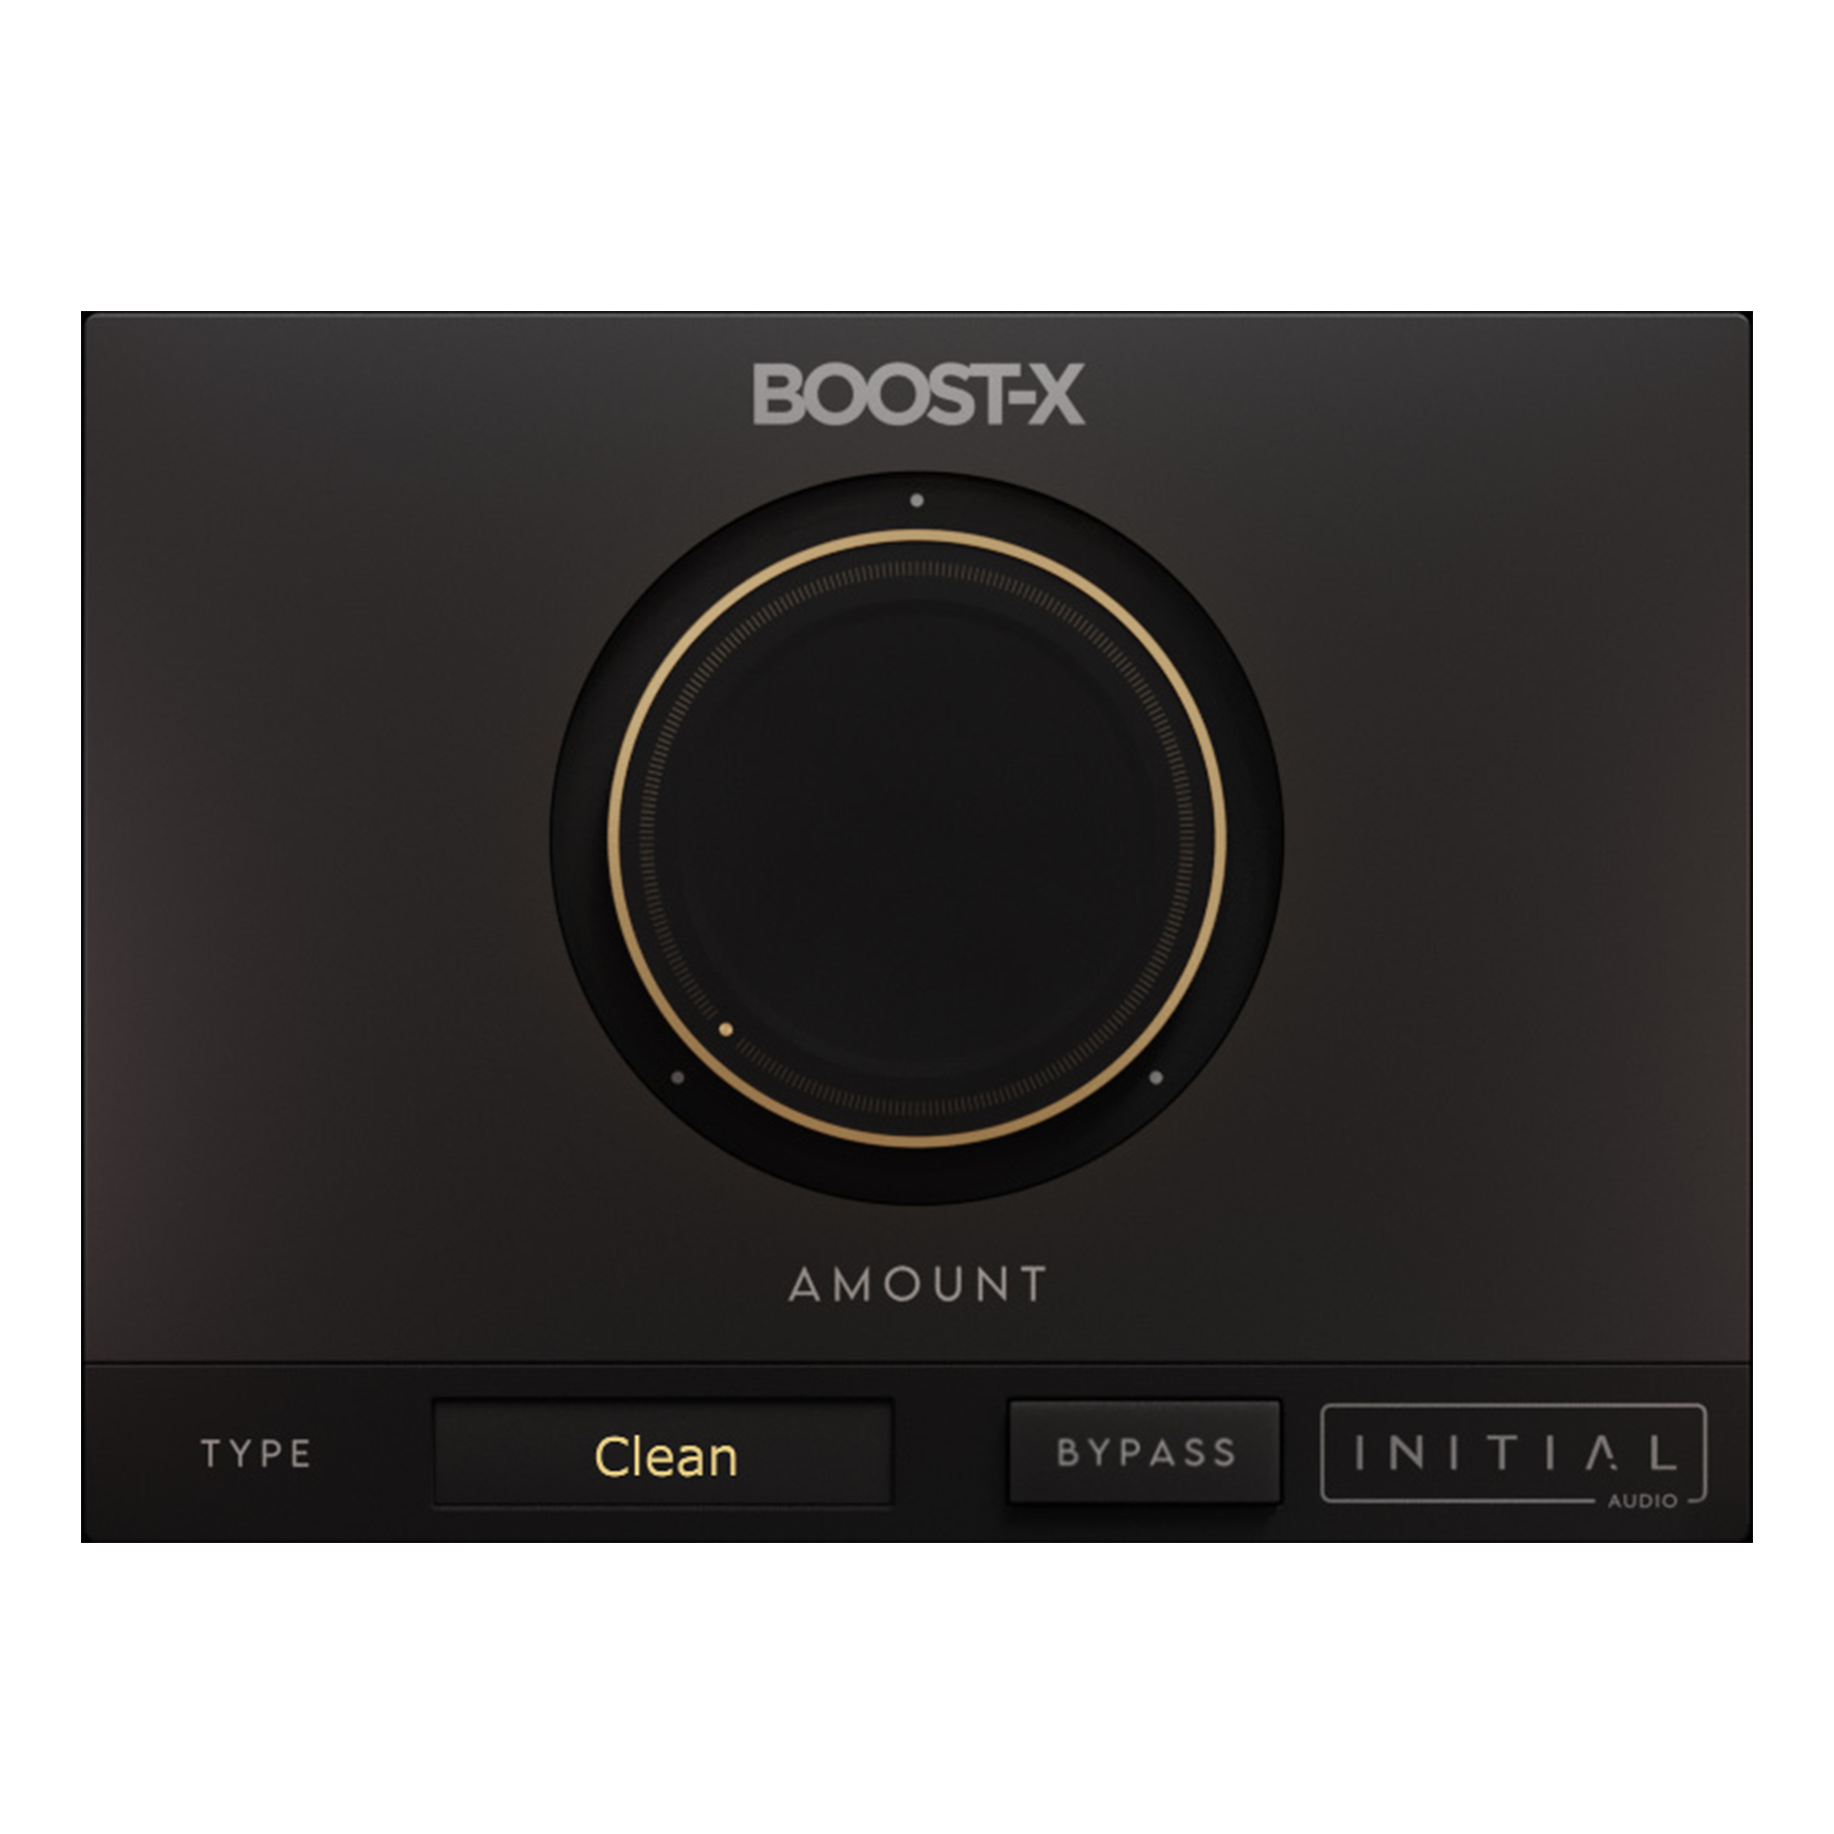 Boost - Dynamic Initial Audio